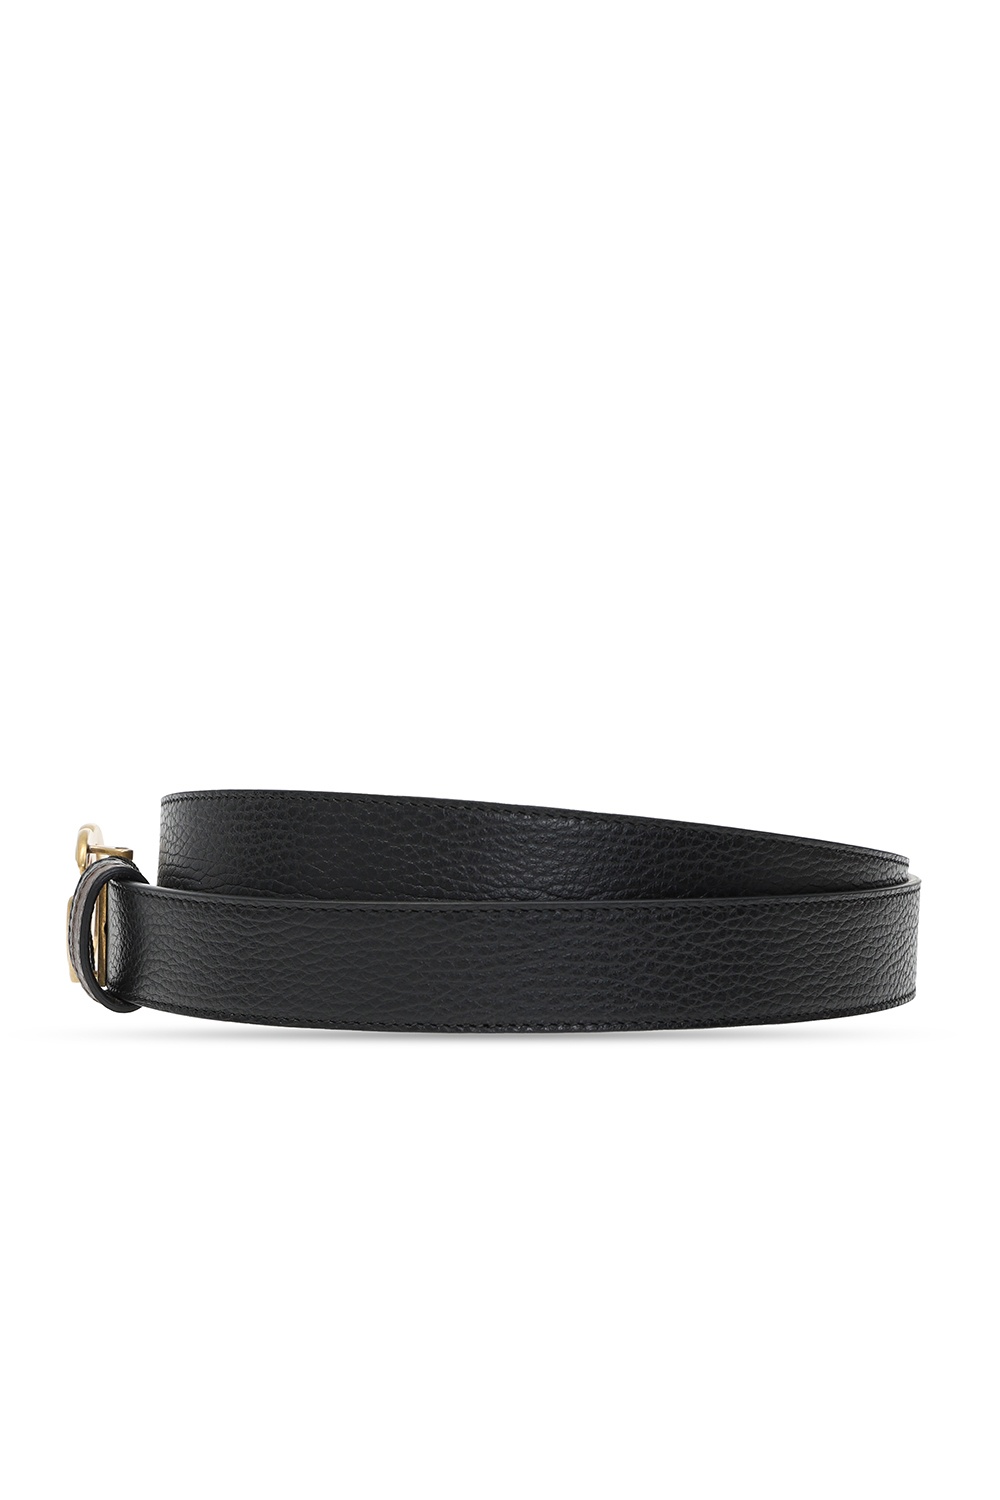 gucci outerwear Reversible belt